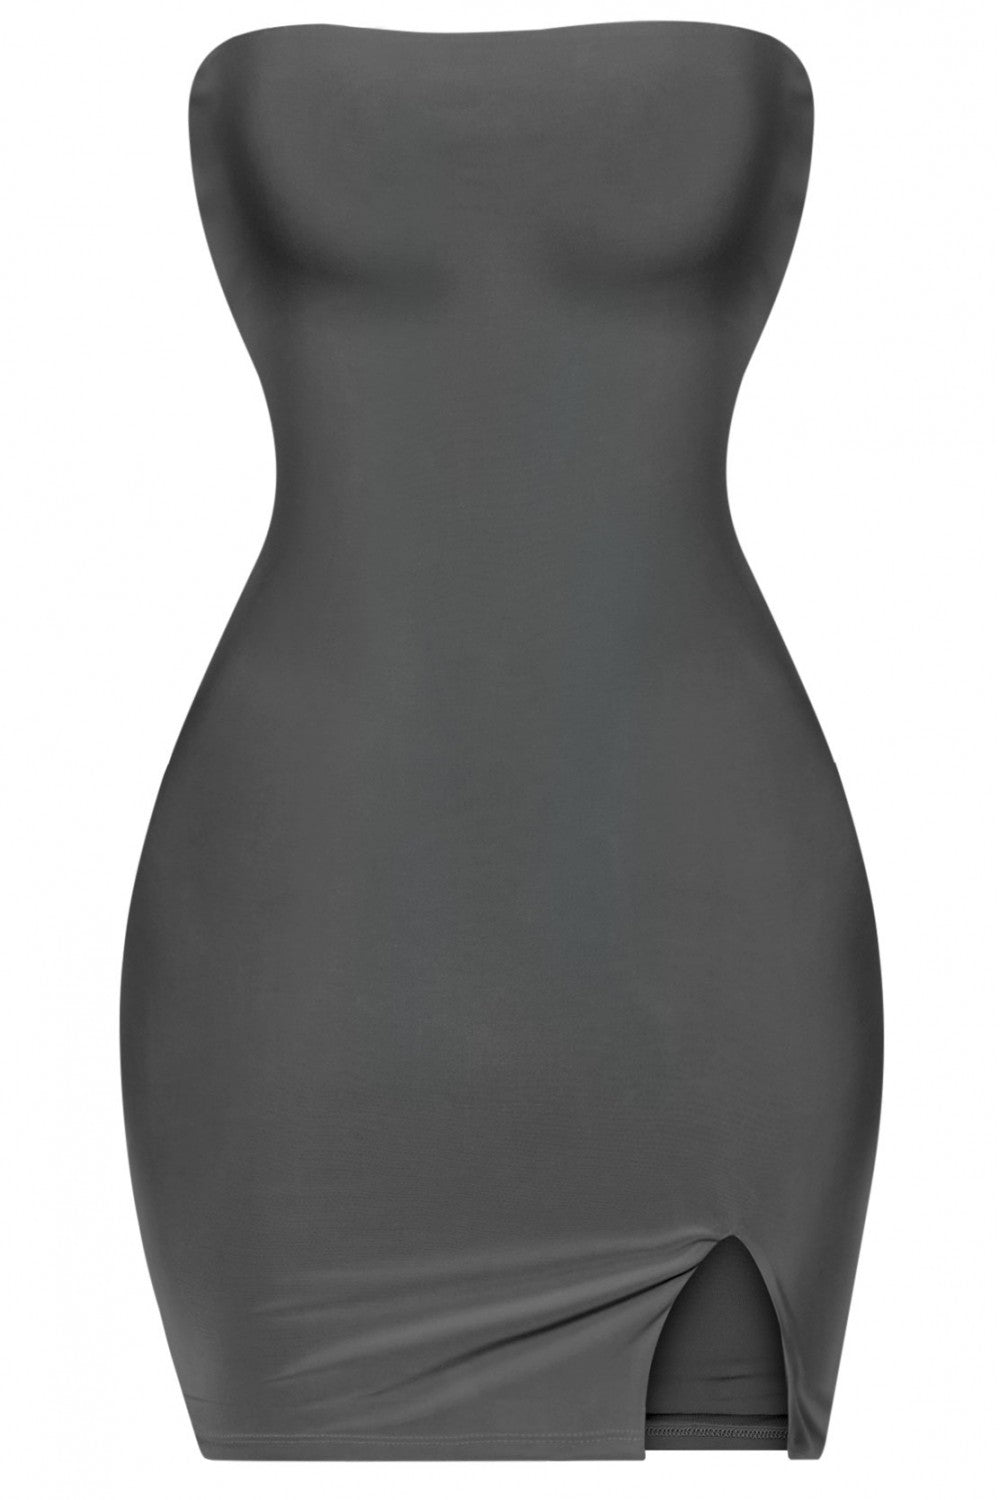 Breeyana Black Tube Side Slit Mini Dress - Style Baby OMG Fashion Boutique - Stylebabyomg - Buy - Aesthetic Baddie Outfits - Babyboo - OOTD - Shie 